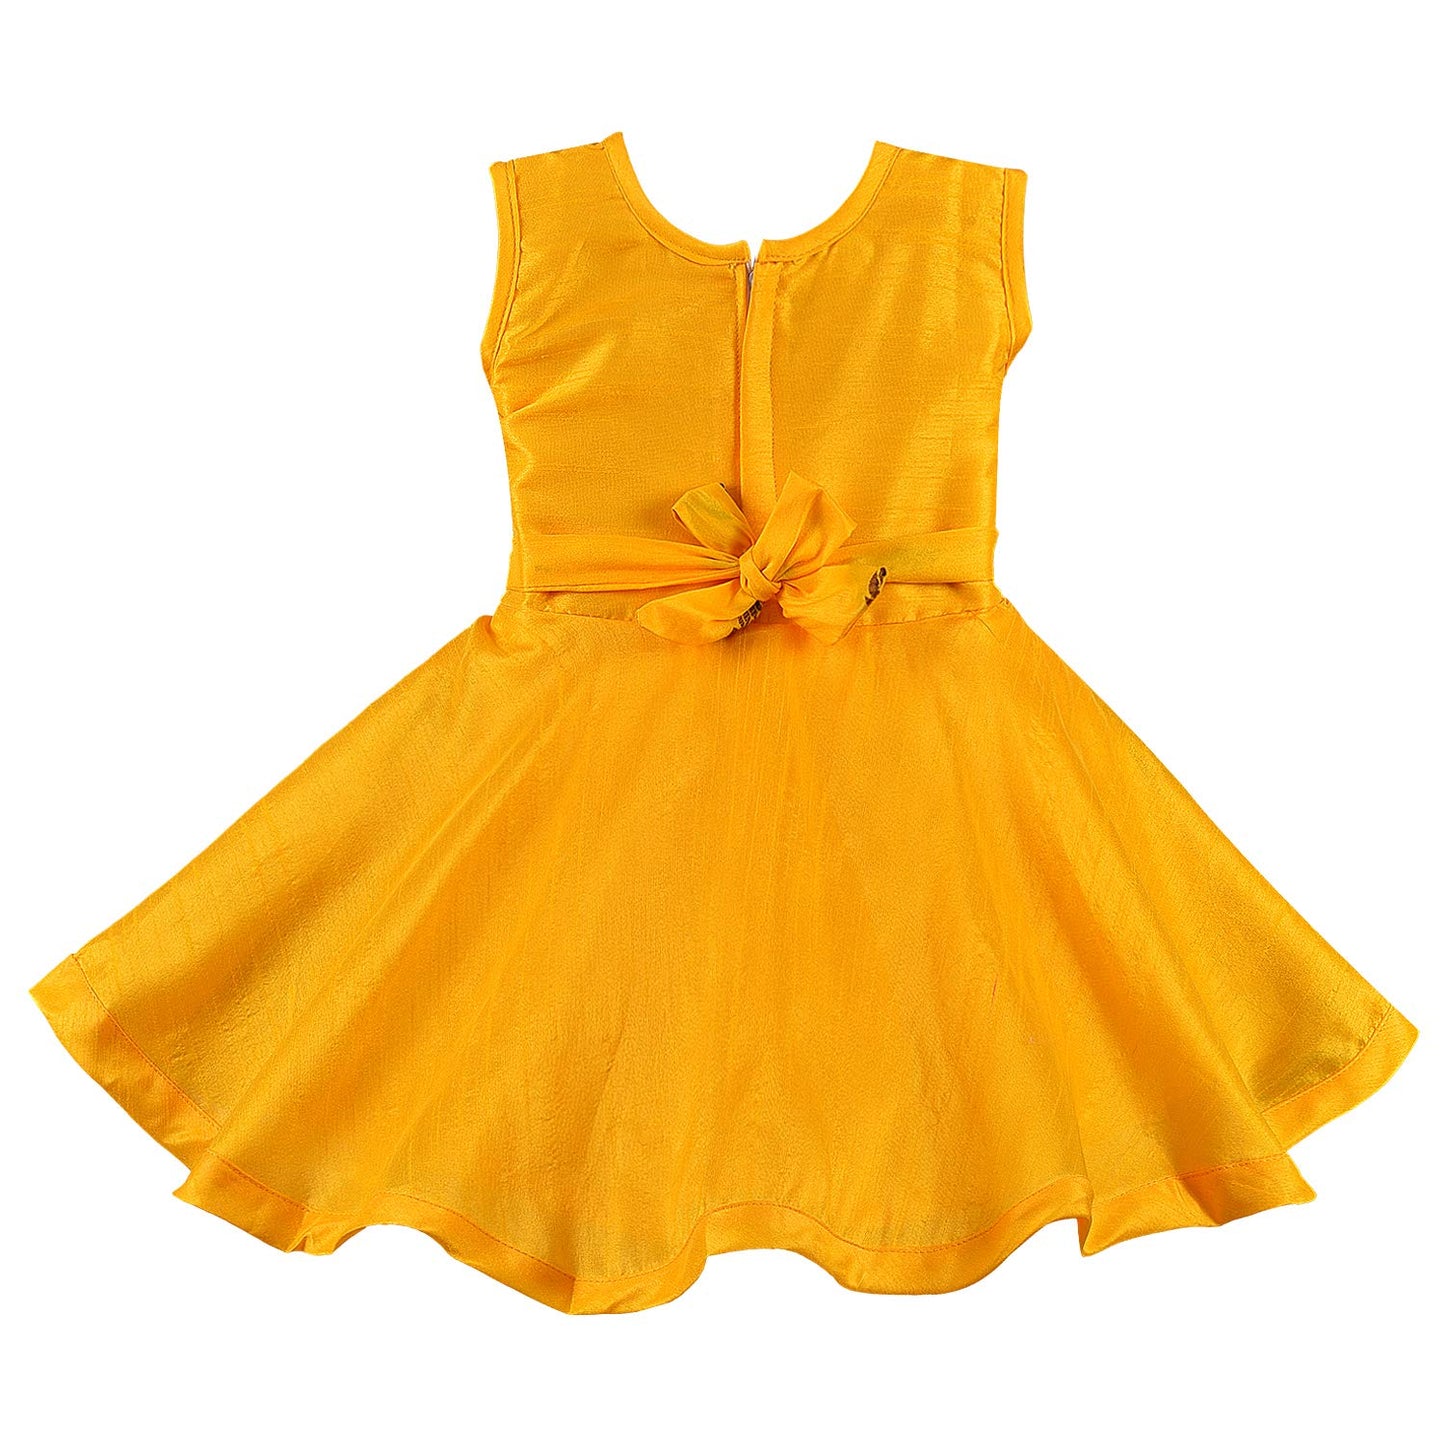 Baby Girls Frock Dress-fe2737y - Wish Karo Party Wear - frocks Party Wear - baby dress